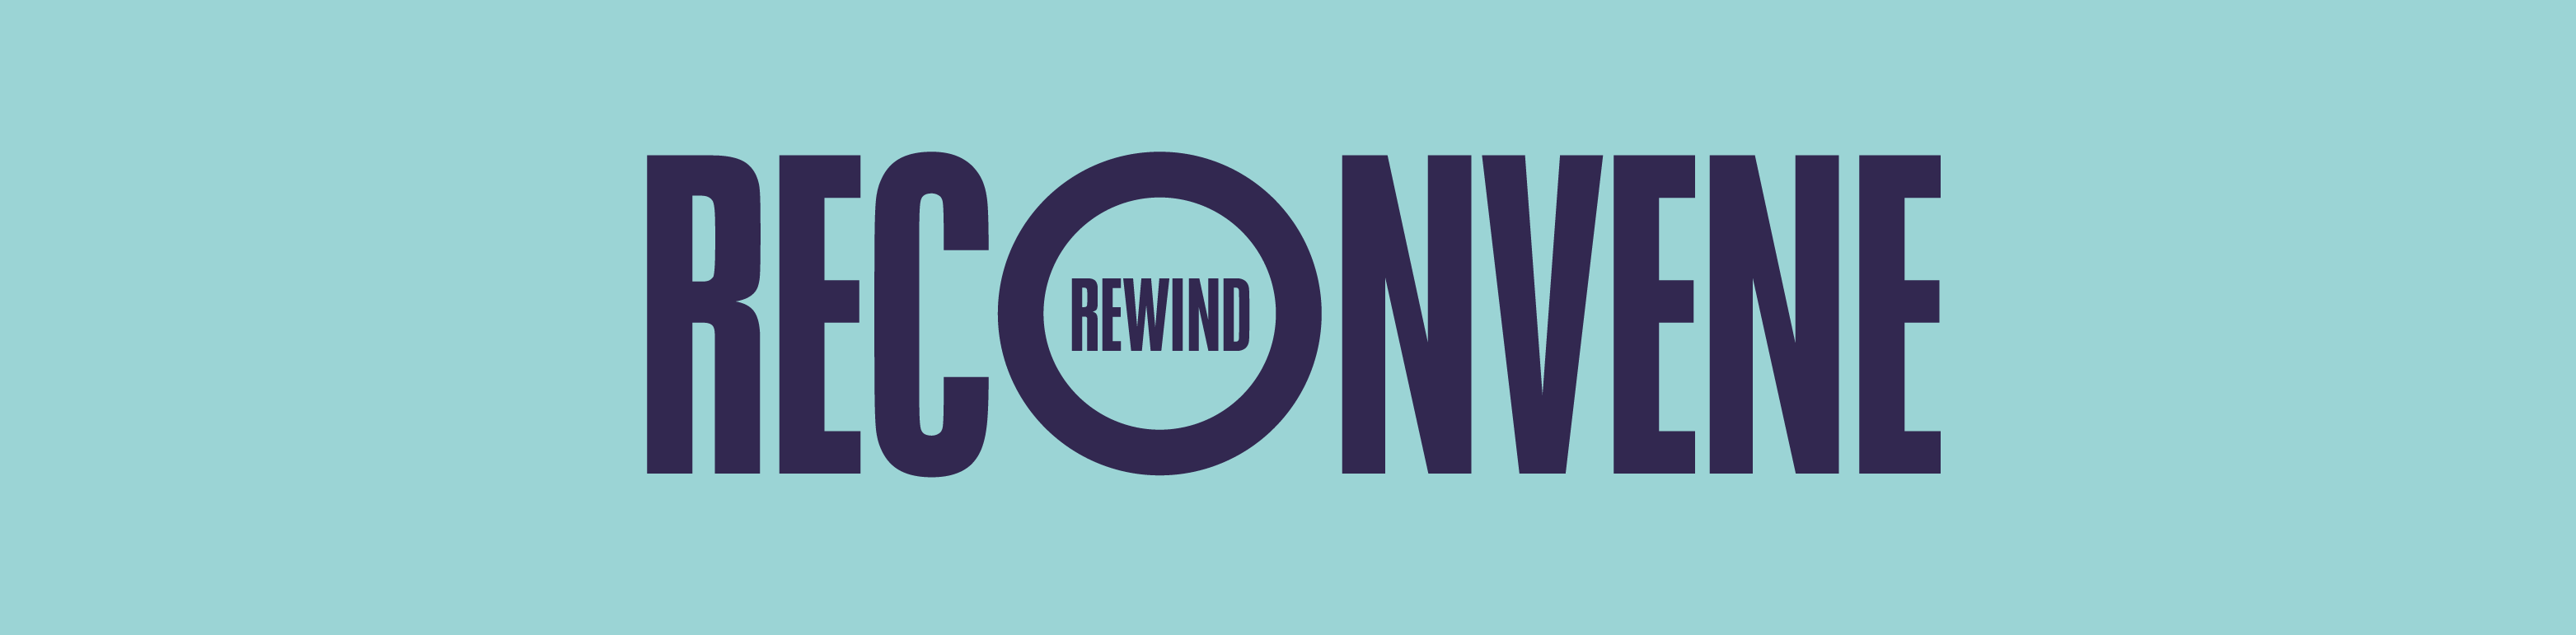 Reconvene Rewind